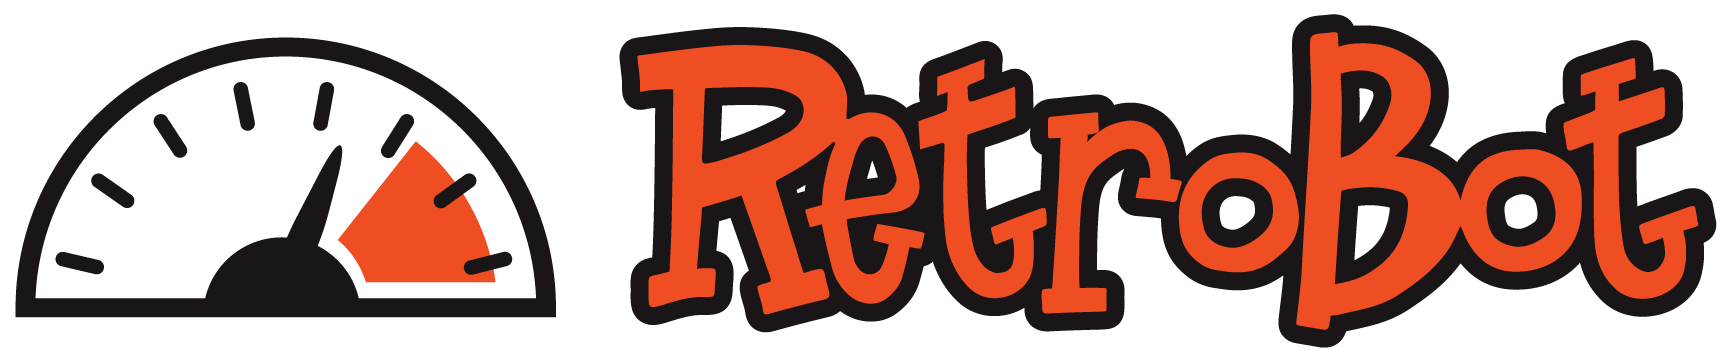 RetroBot logo.png